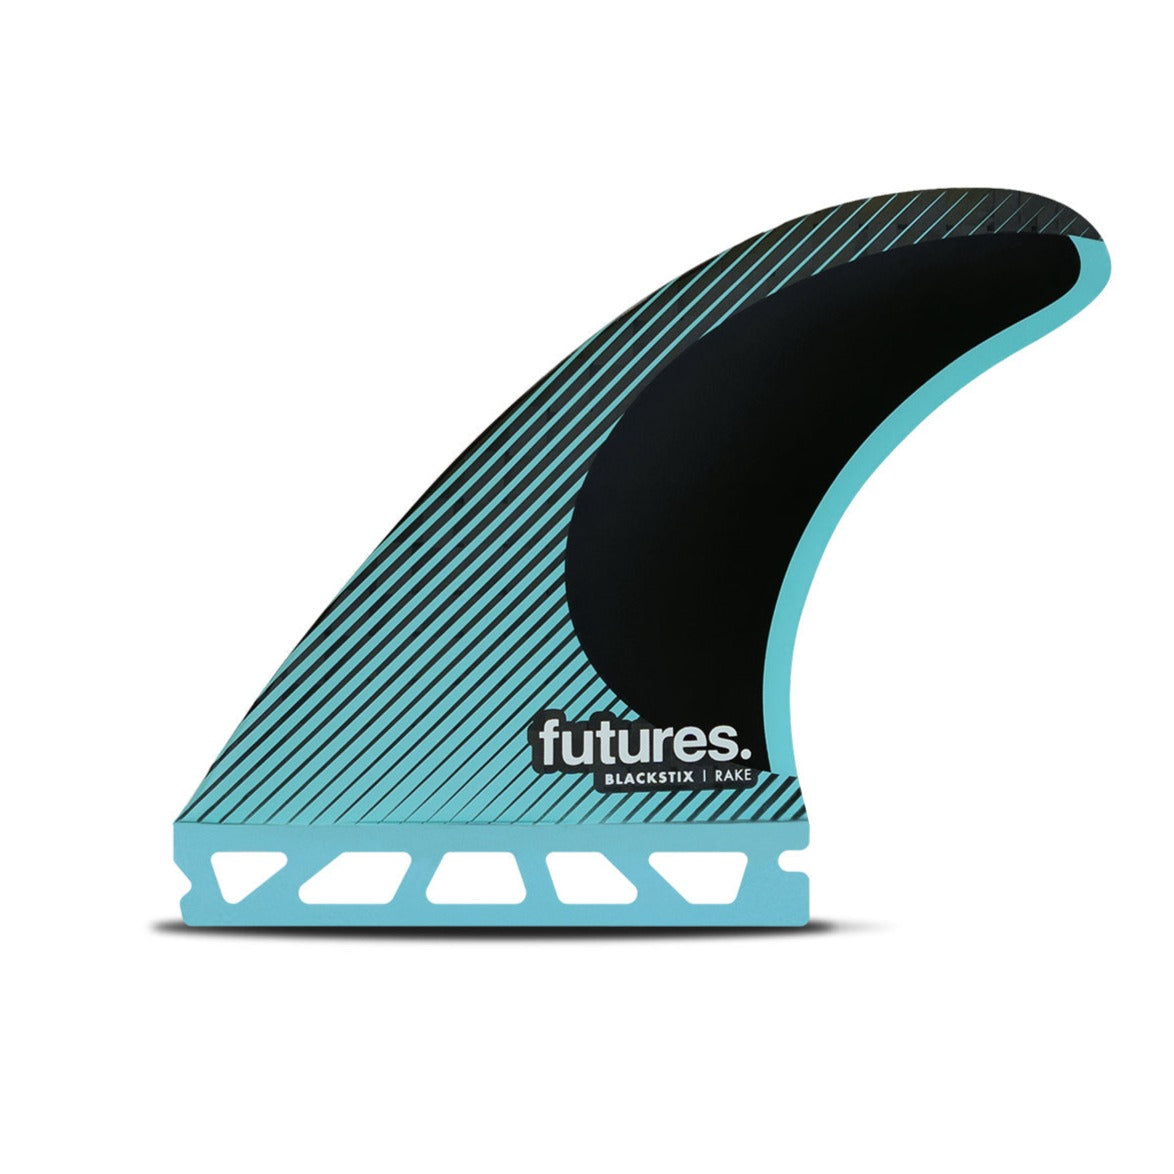 Futures-Small-R4-Blackstix-Thruster-Surfboard-Fin-rake-Blue-galway-ireland-blacksheepsurfco-template